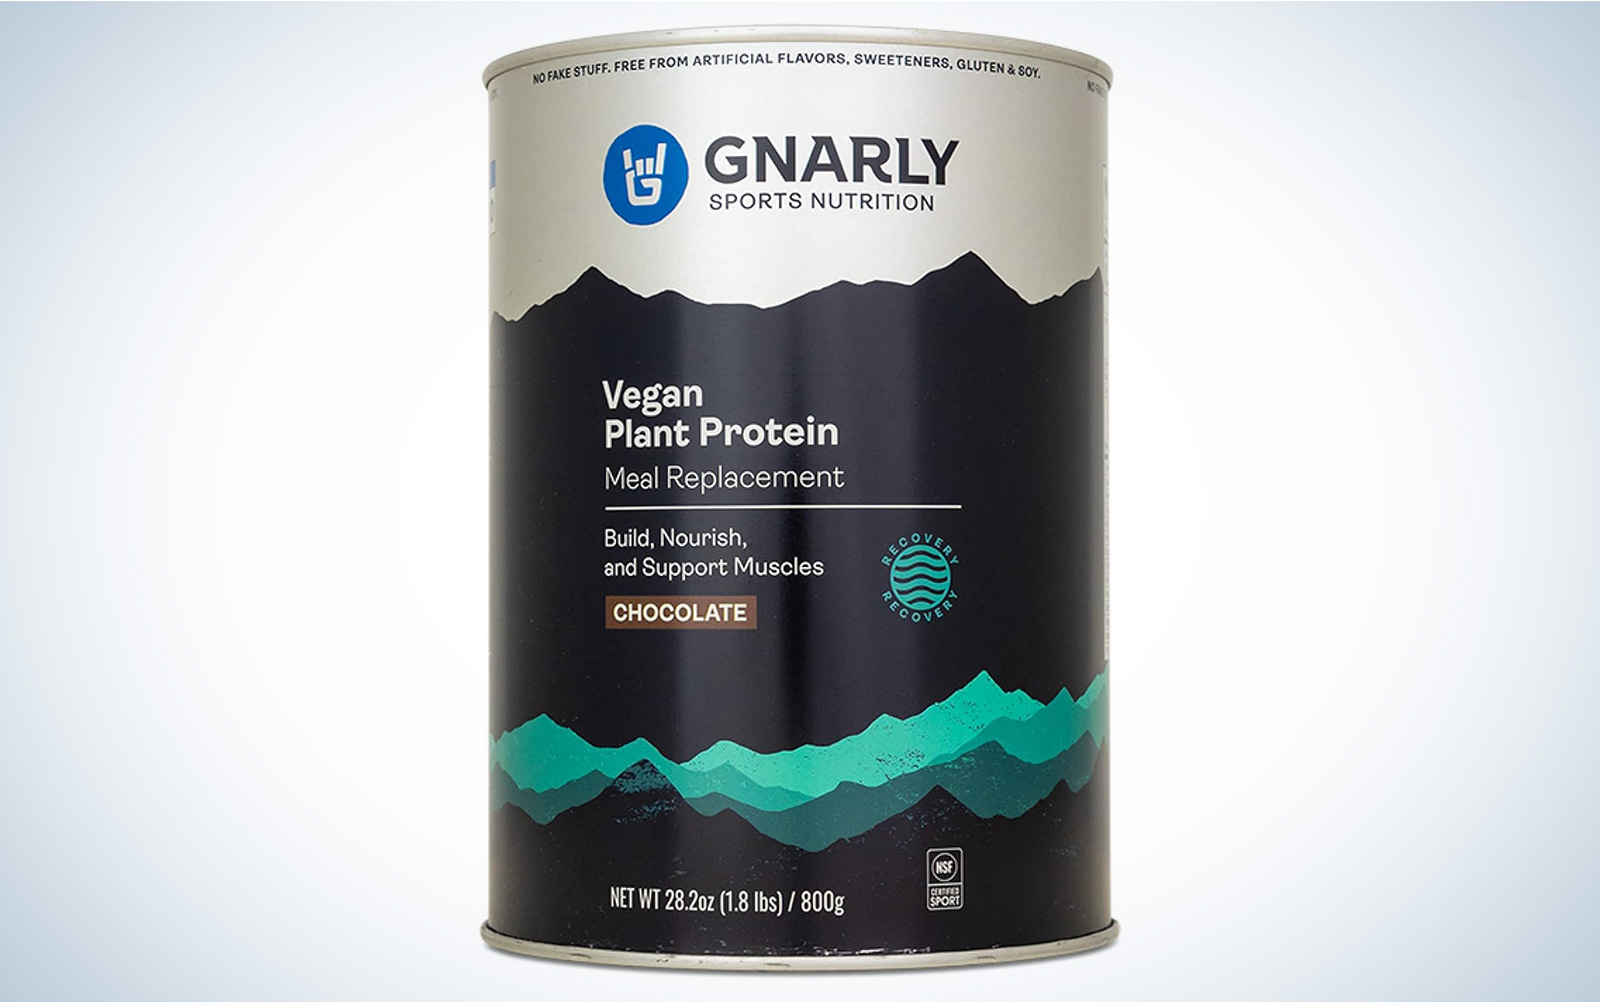 Gnarly vegan protein powder